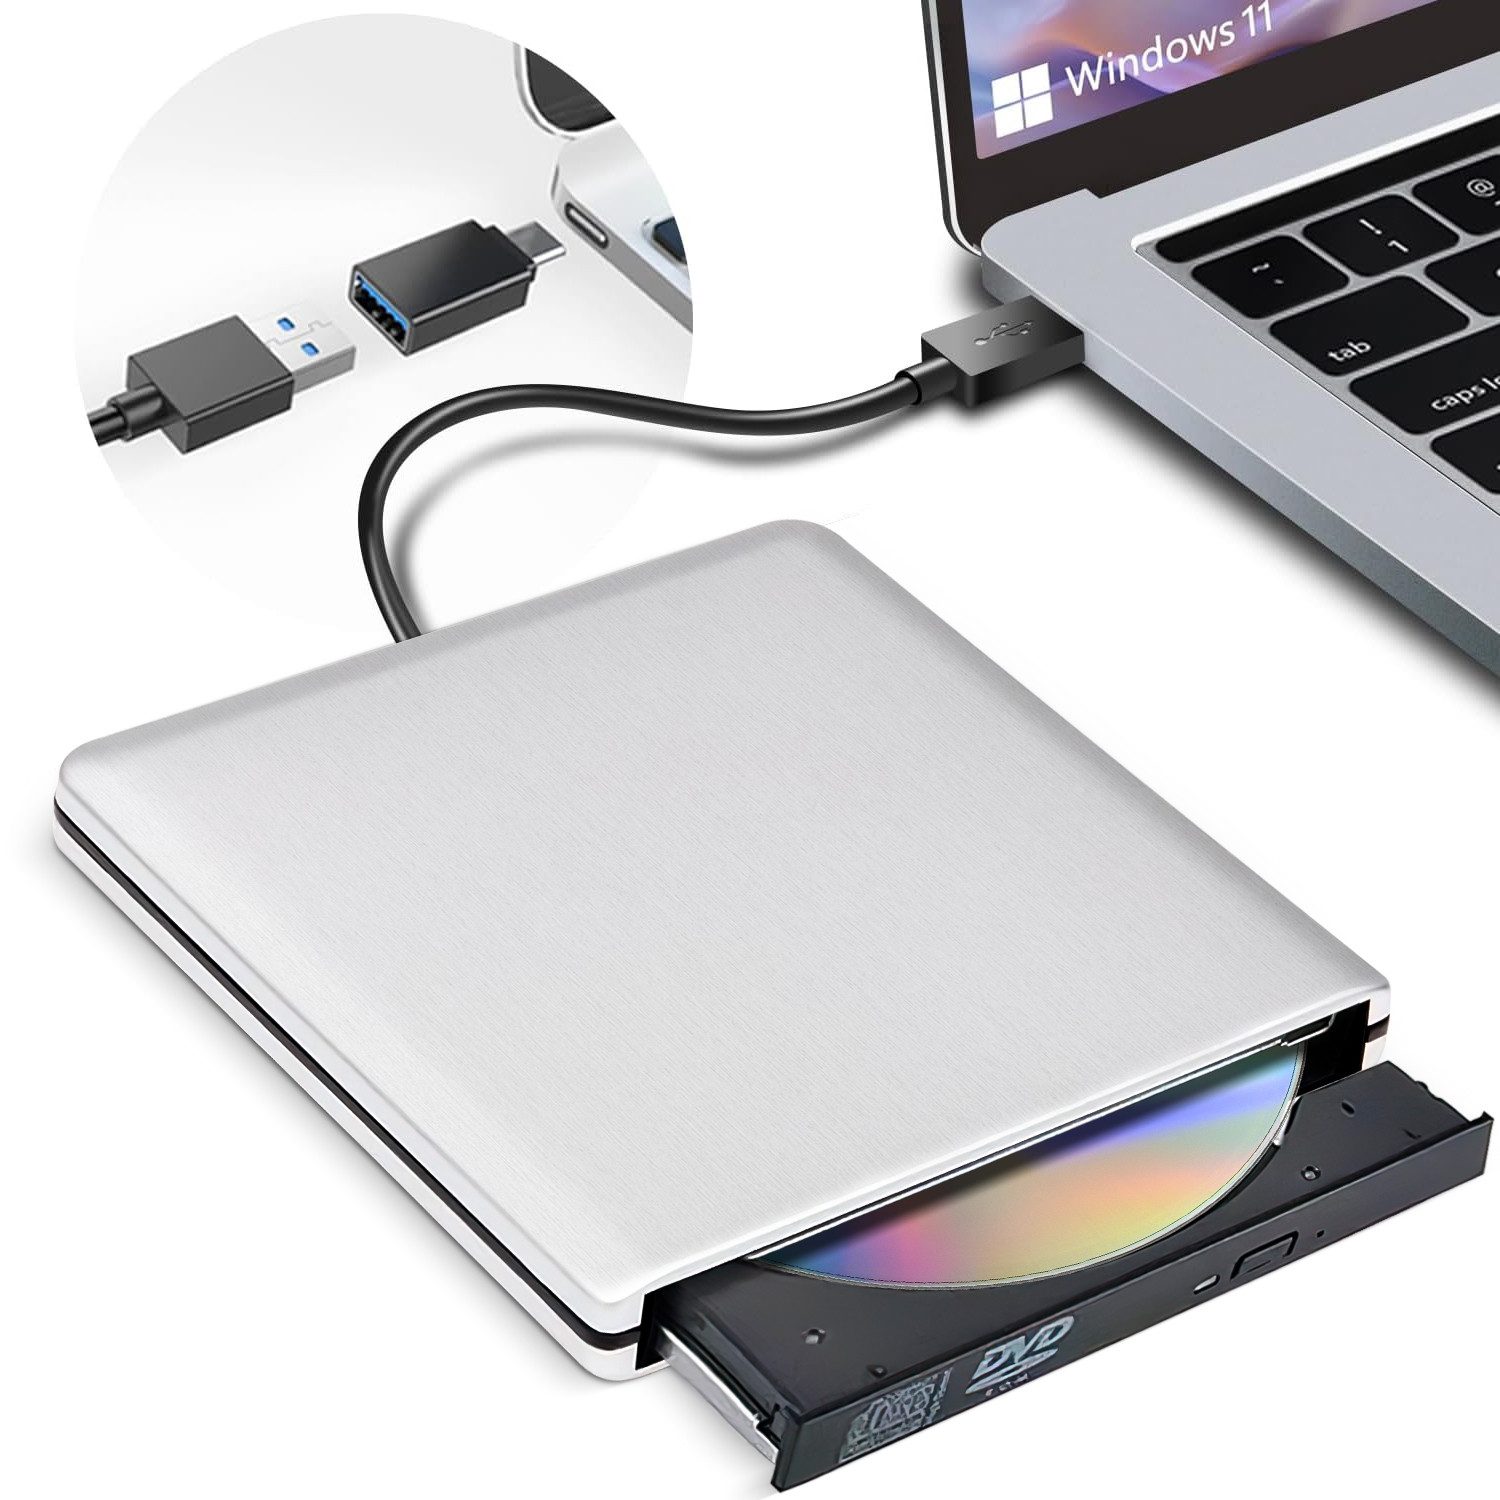 Cbei Externes DVD CD RW Optisches Laufwerk Slim Leser Tragbar DVD-Brenner Diskettenlaufwerk (USB 2.0, USB 3.0, DVD 8x/CD 24x, Kompatibel mit Win7/8/10, Window2003/XP/Vista, Mac10 OS, Linux usw)